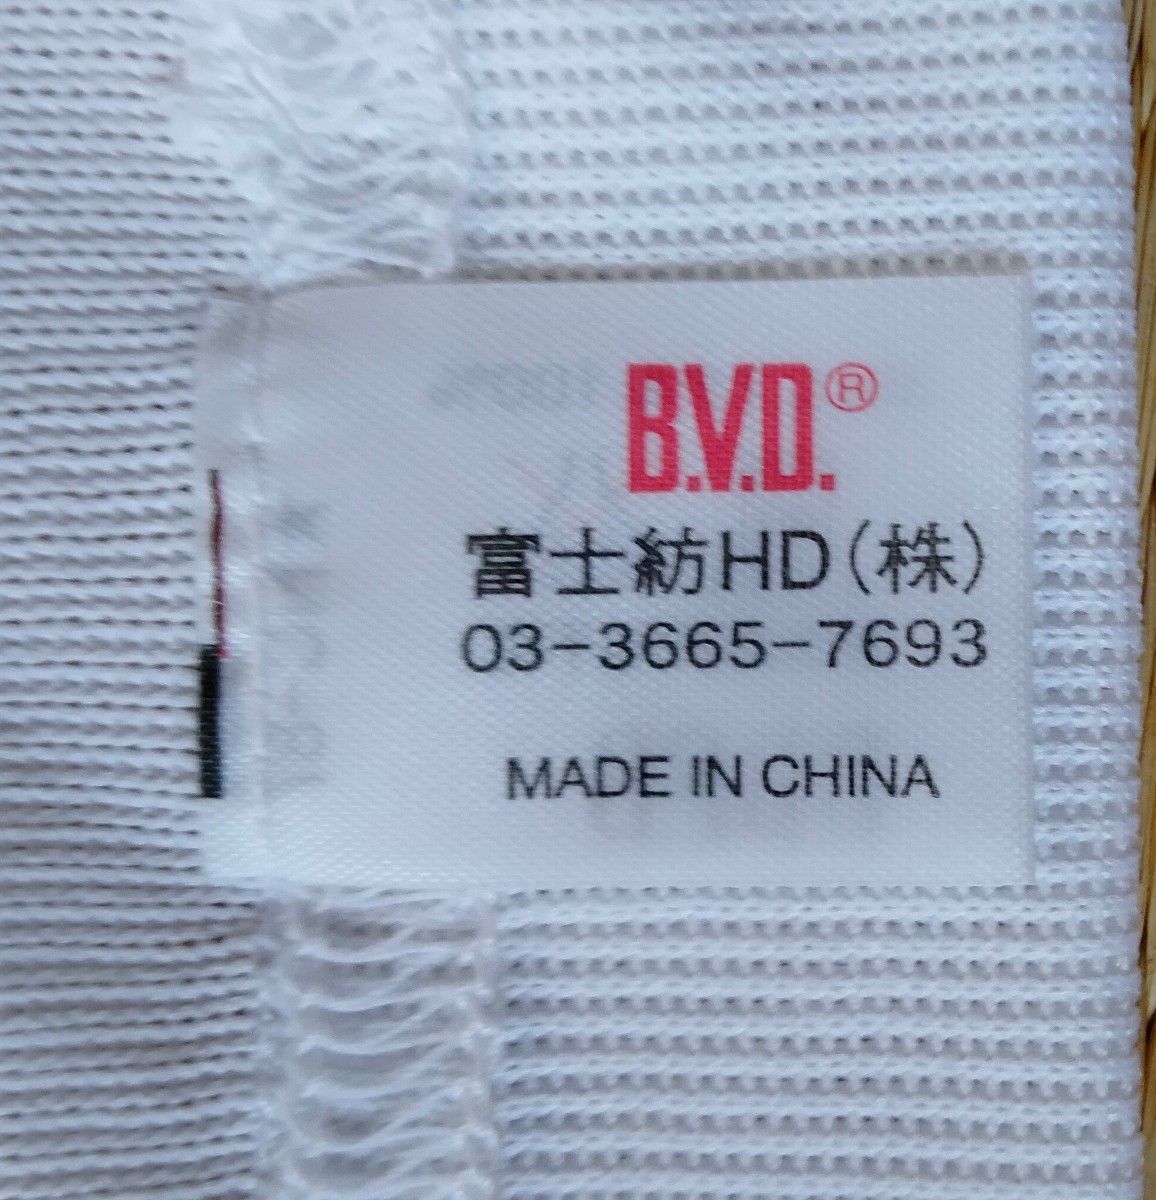 BVD 　ノースリーブシャツ　M　タグ付き 新品未使用品　インナー　下着 　白　B.V.D